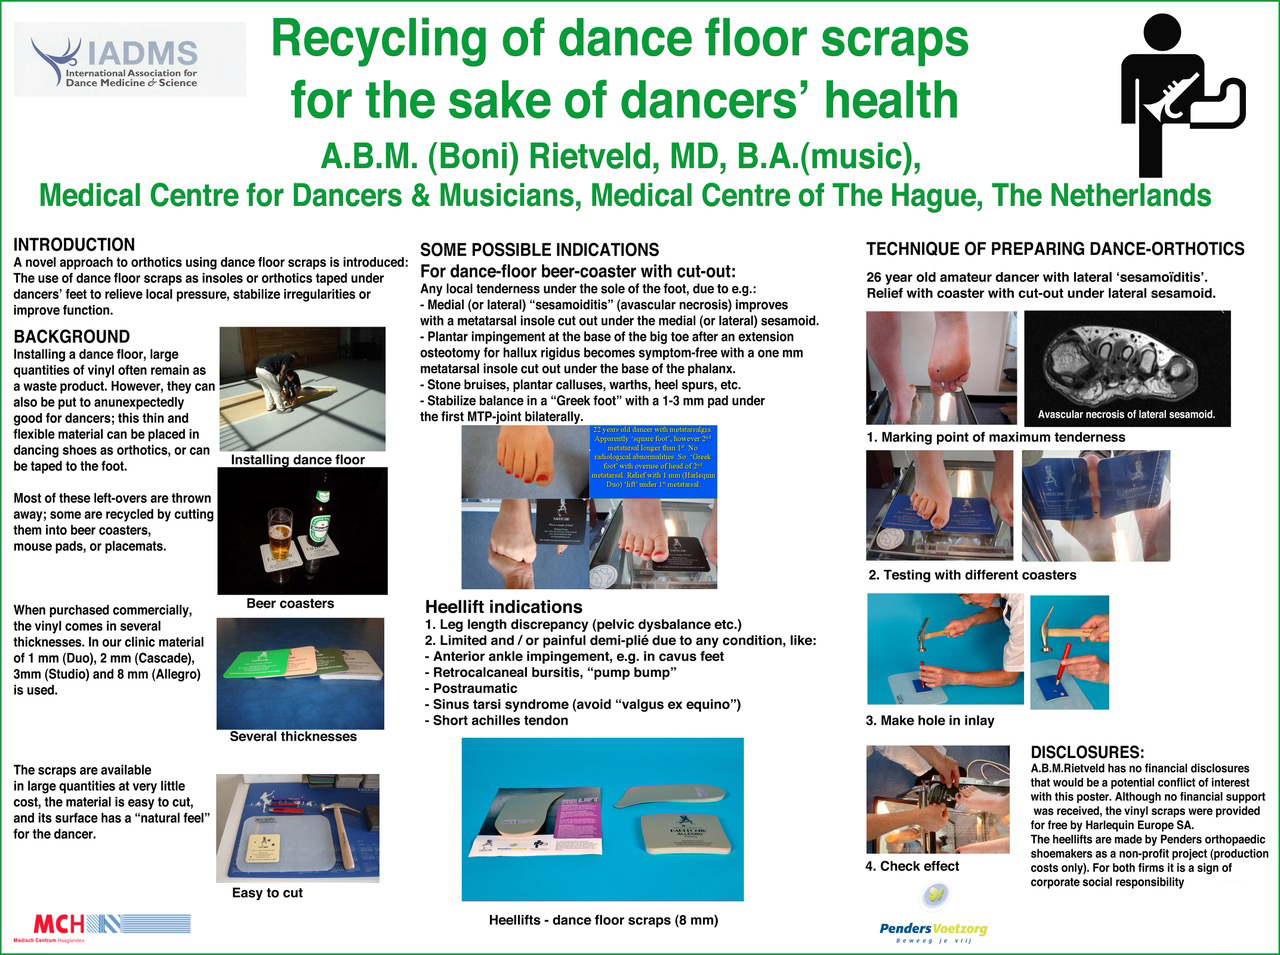 Orthopedic surgeon and musician, Dr. A.B.M. (Boni) Rietveld, MD, PhD, BA (music) shares his poster presentation on Sesamoid & Harlequin dance floor scraps.